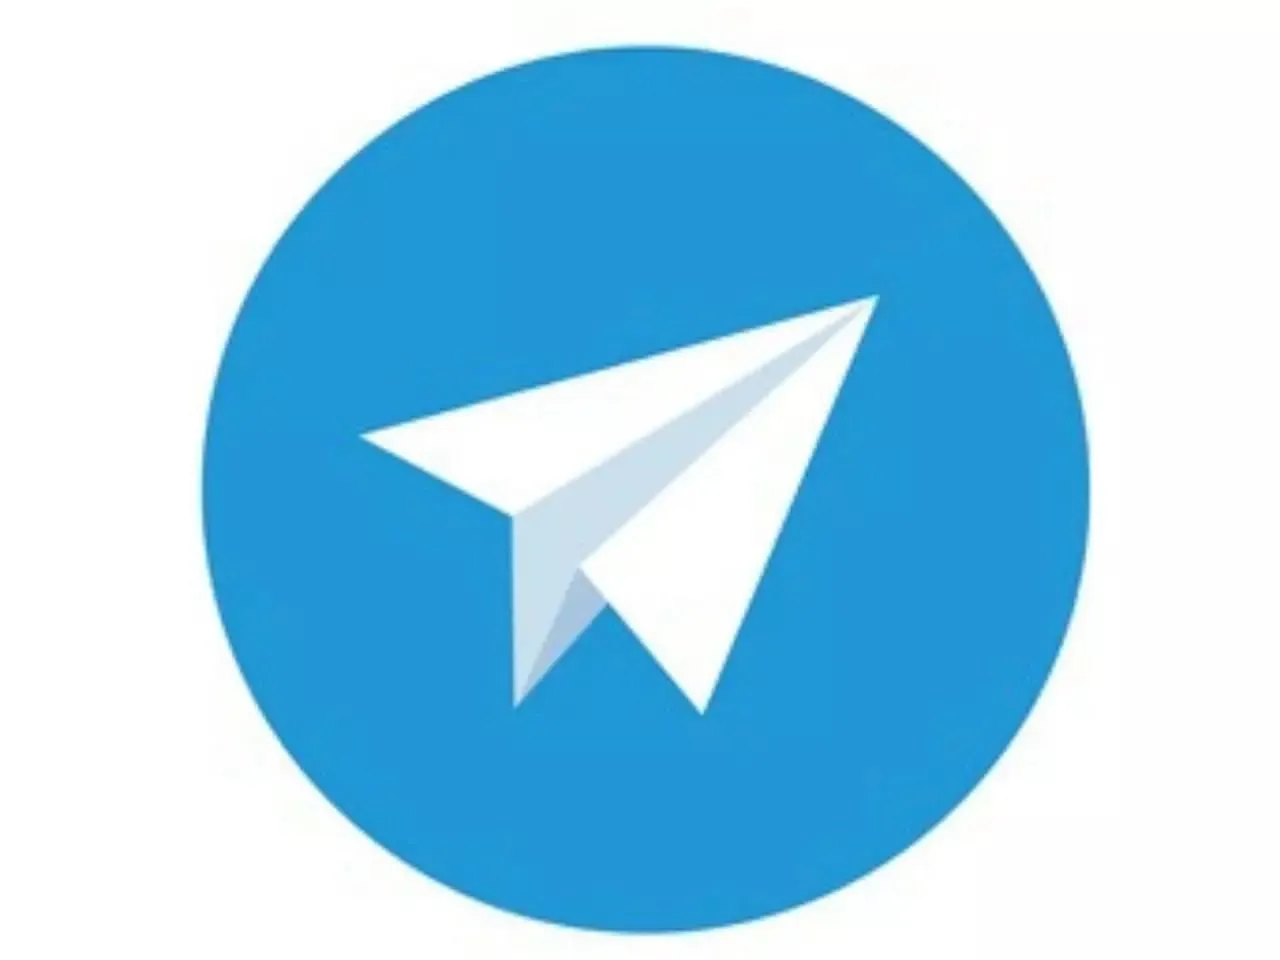 Отправитель телеграм. Логотип телеграмм. Телеграмм без фона. Телеграмм на прозрачном фоне. Значок телеграм без фона для вставки.